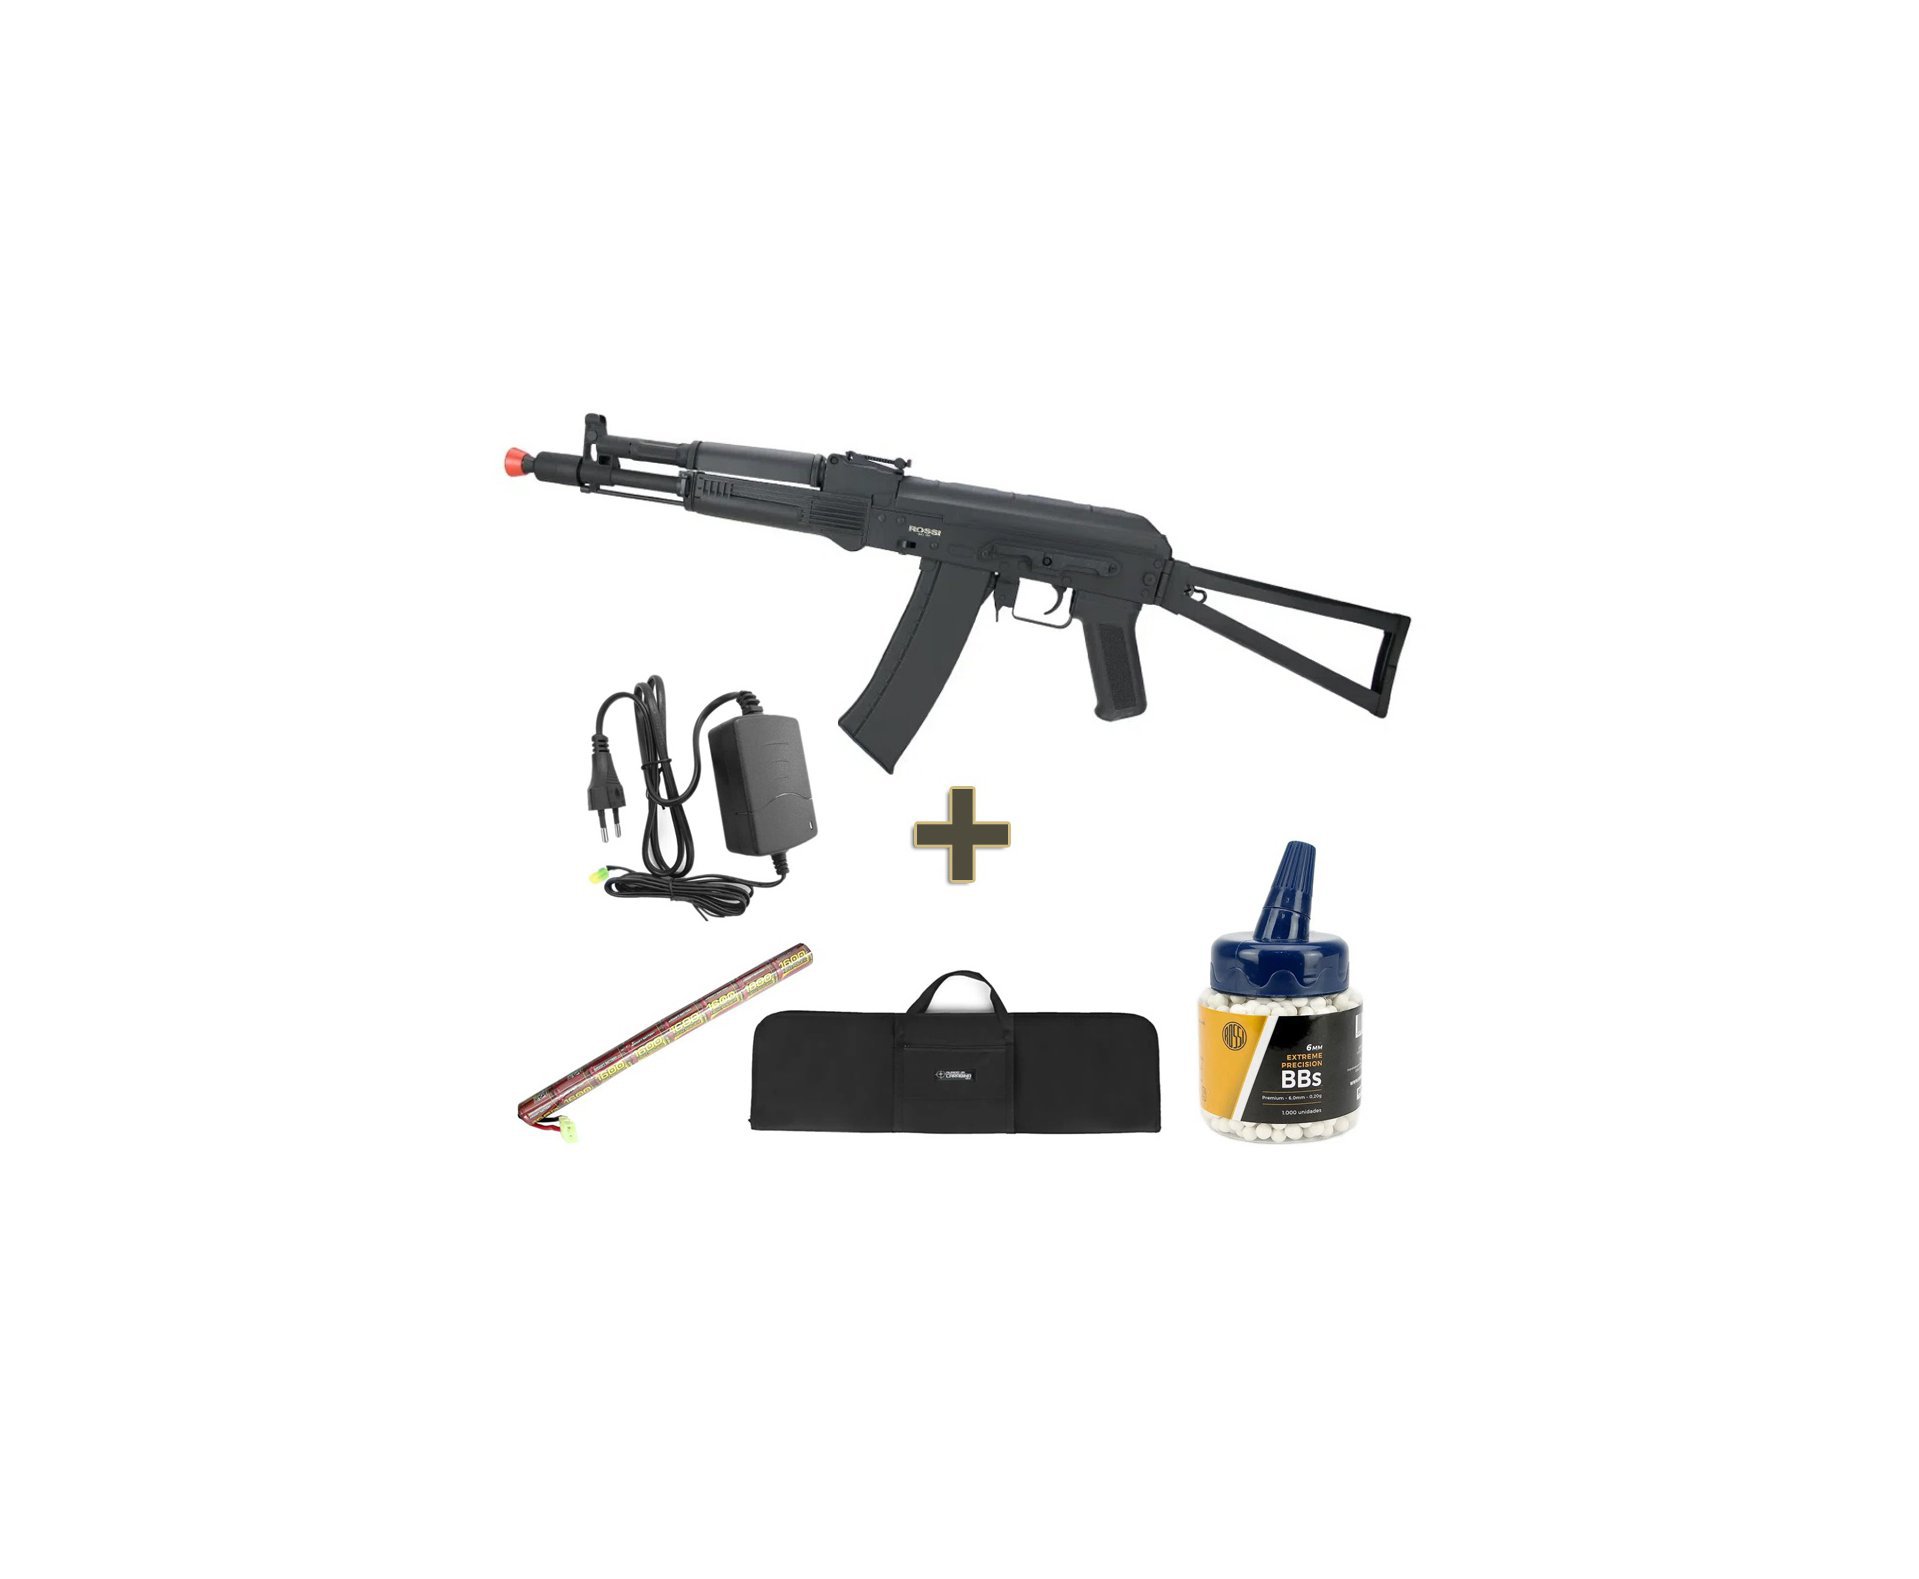 Rifle de Airsoft Neptune AK105S mosfet Full Metal 6mm - Rossi + Bateria + Carregador + Capa + BBS